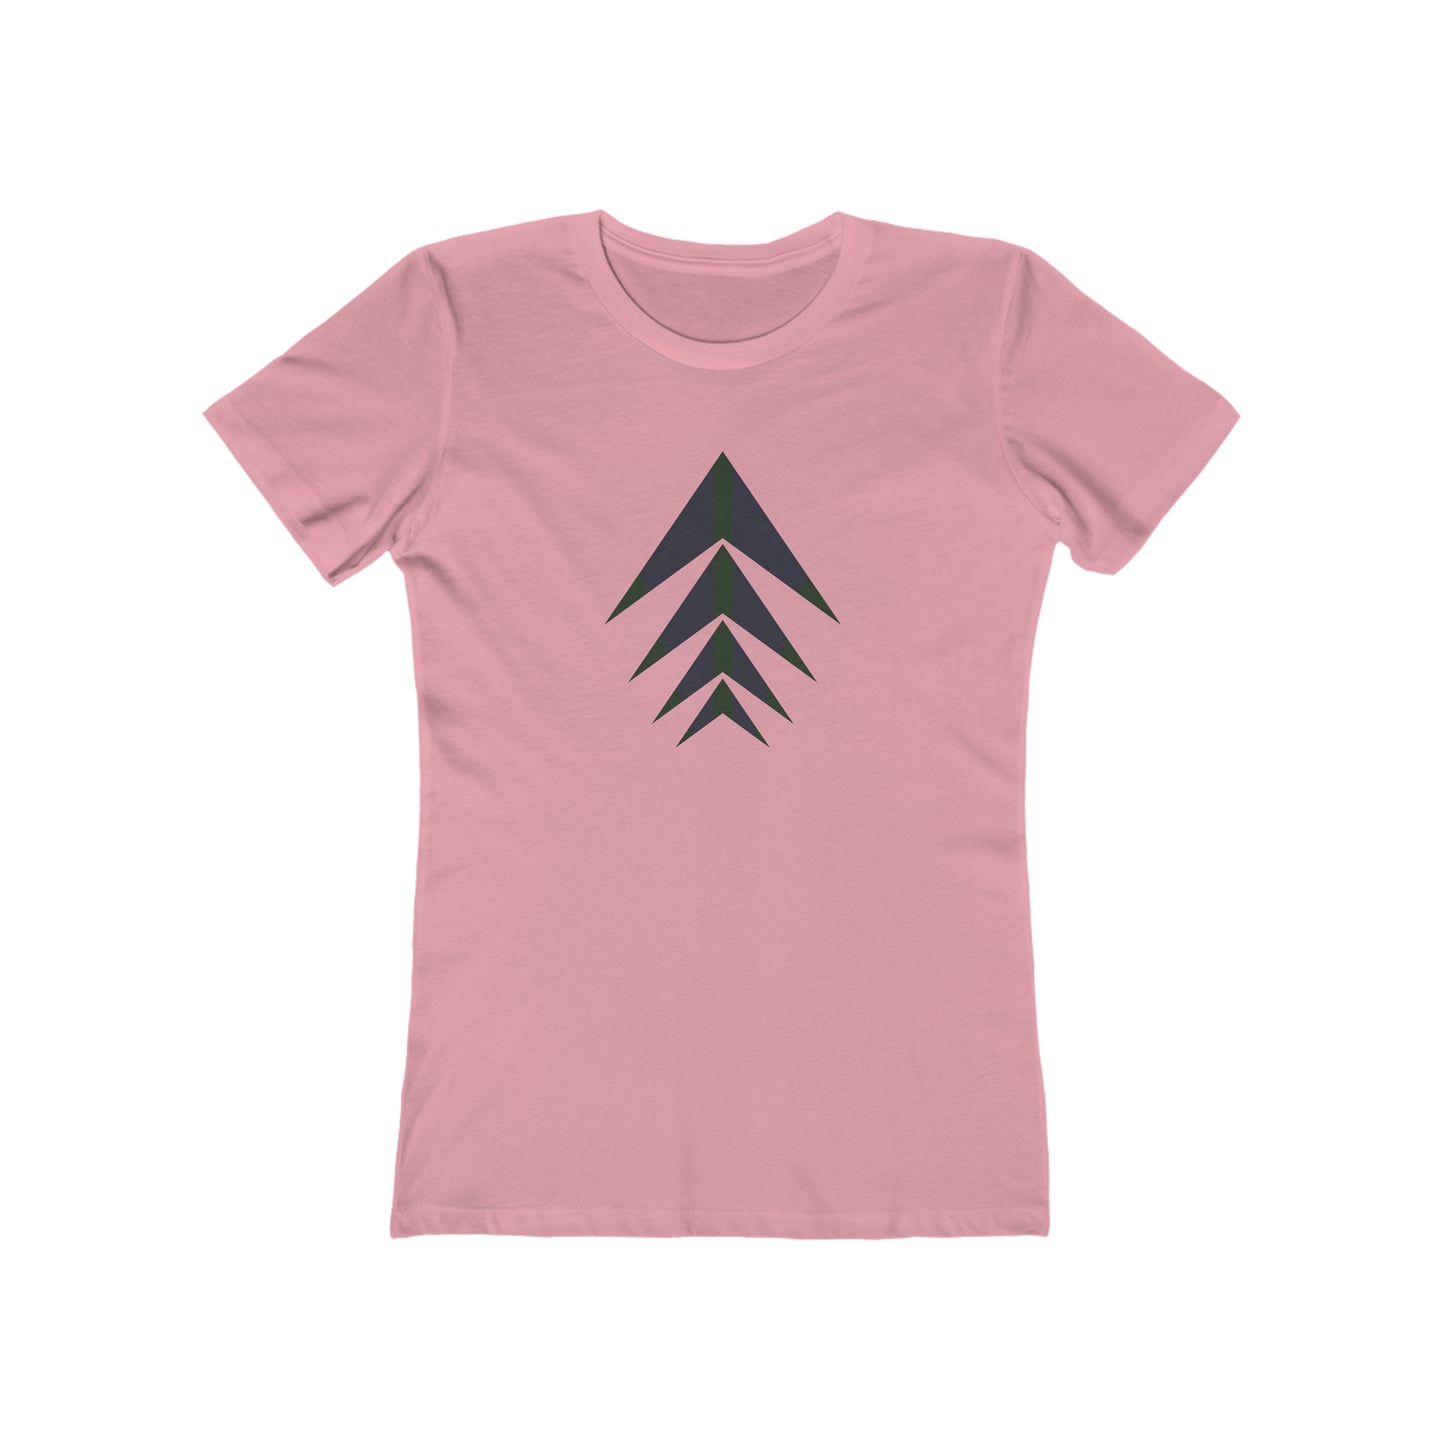 Arrows - Women's T-Shirt